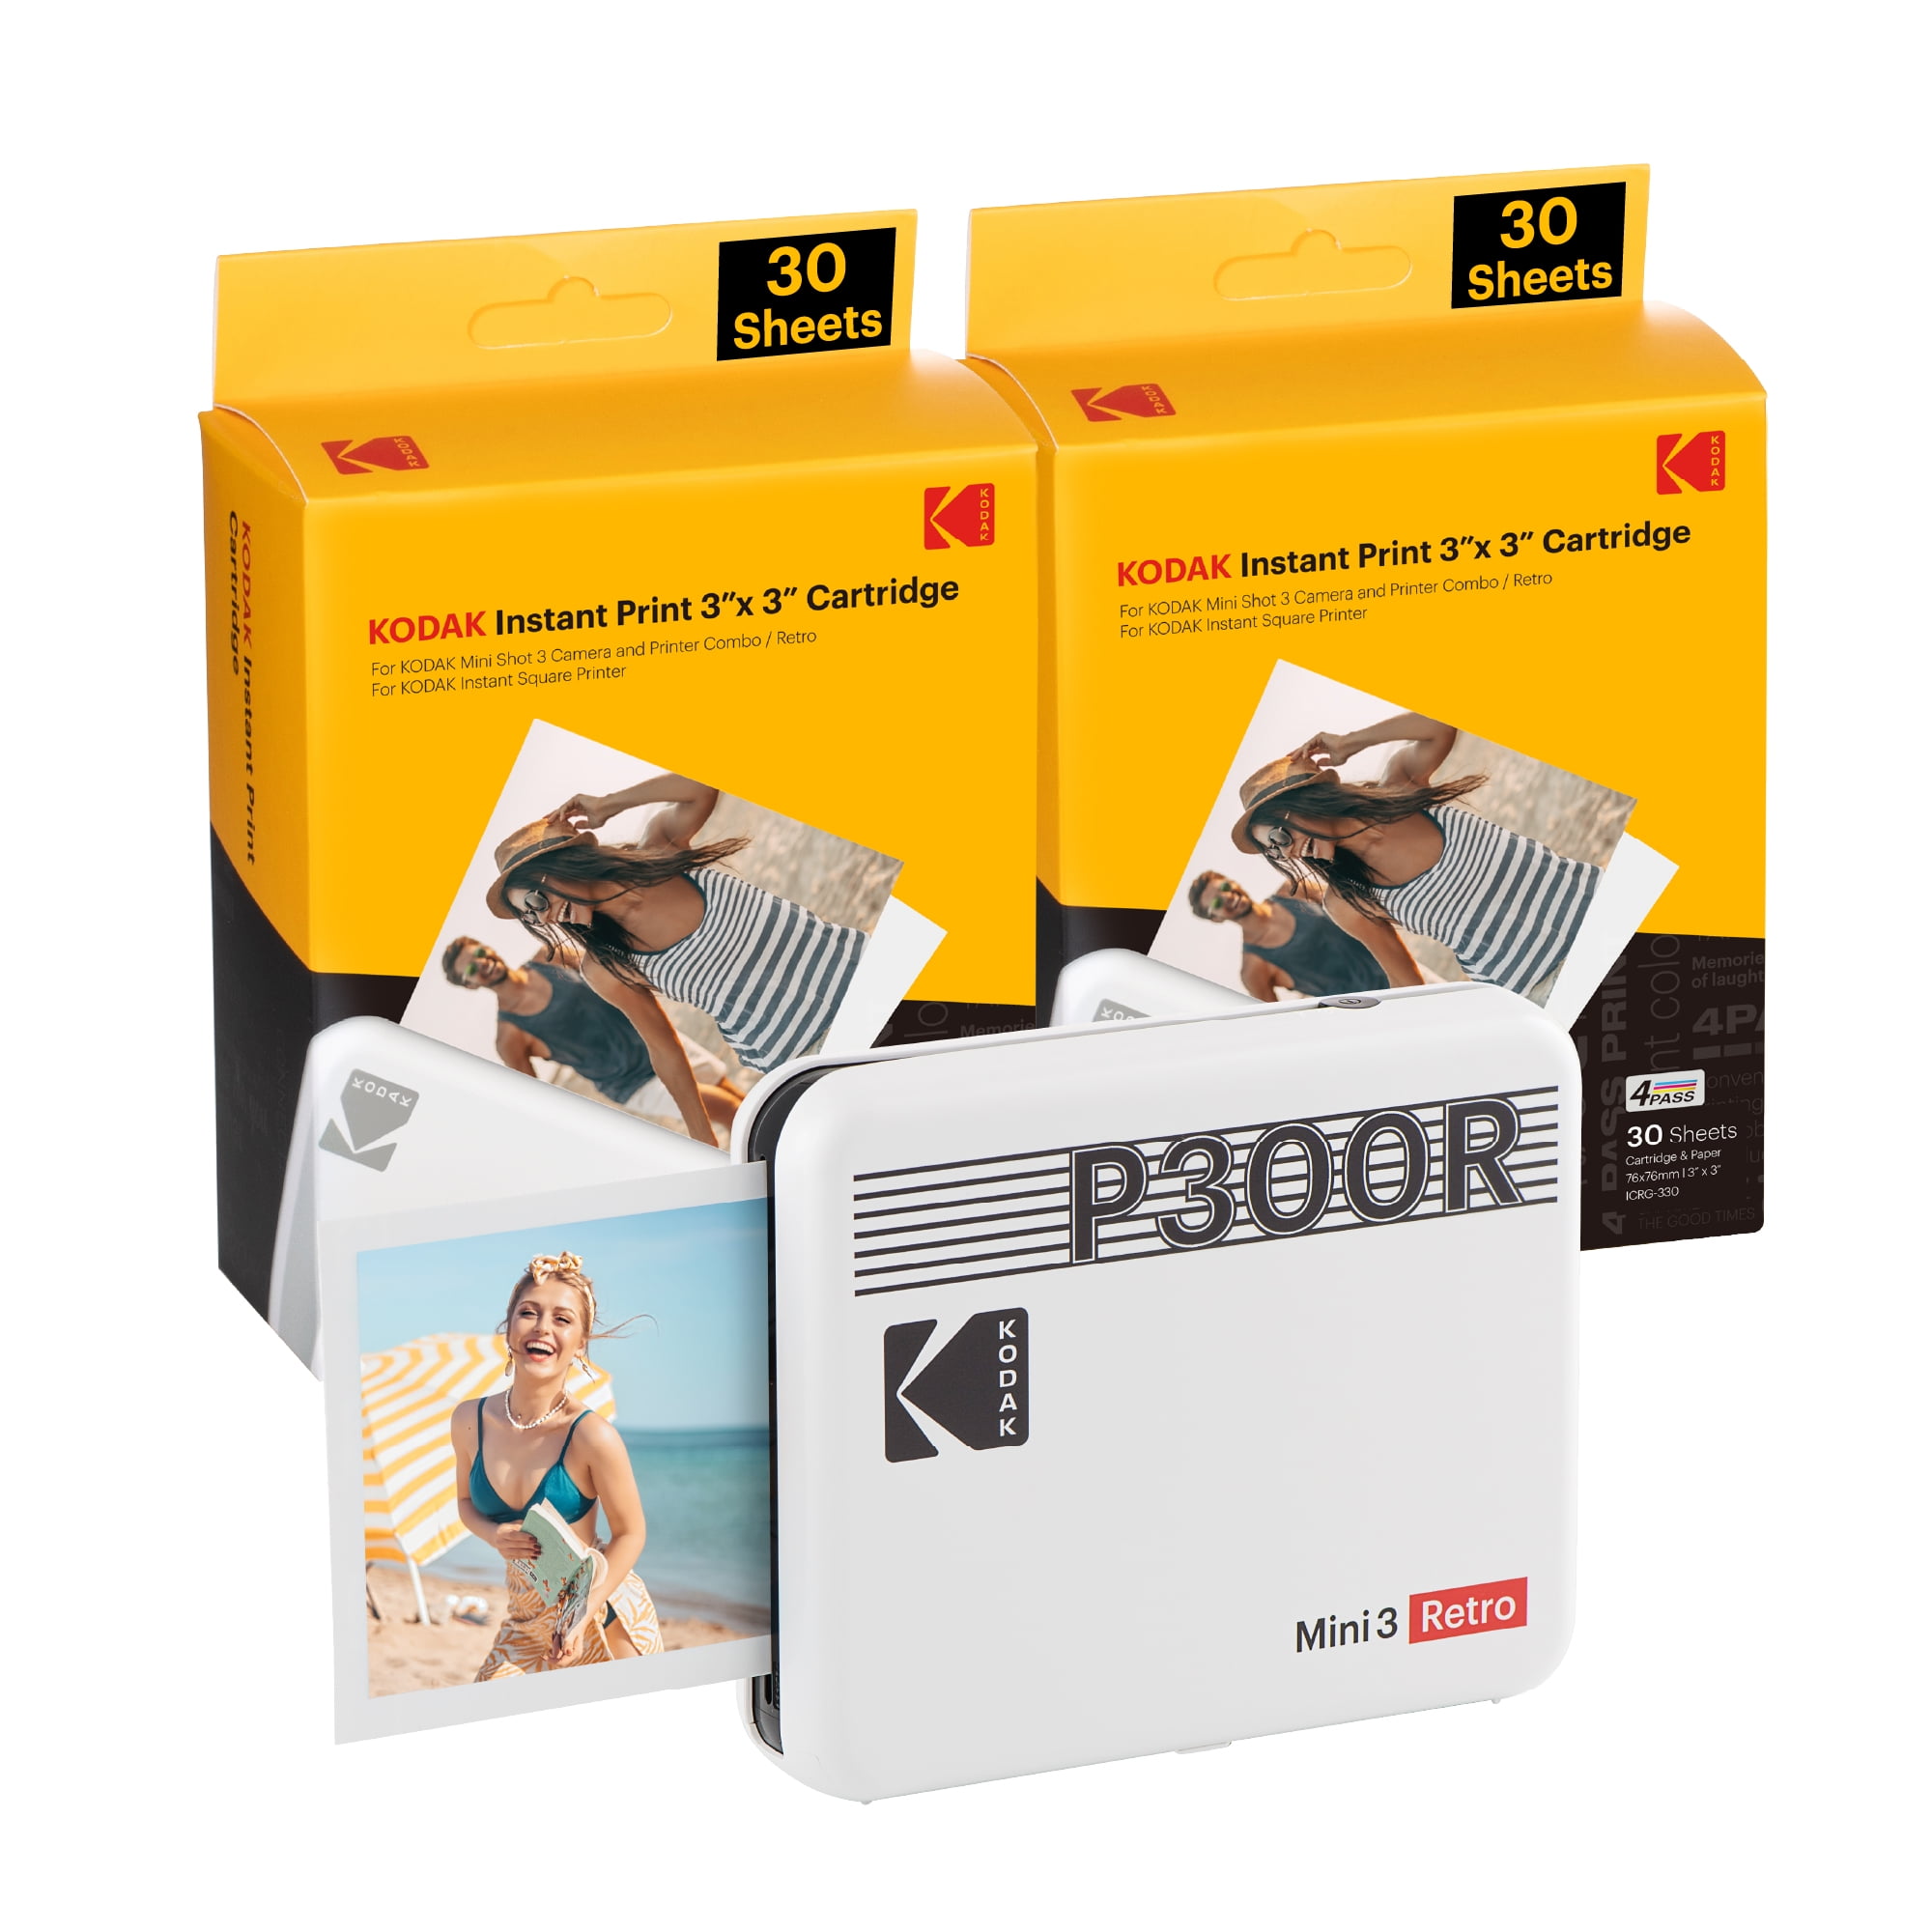 KODAK Mini 3 Retro 4PASS Portable Photo Printer (3x3 inches) + 68